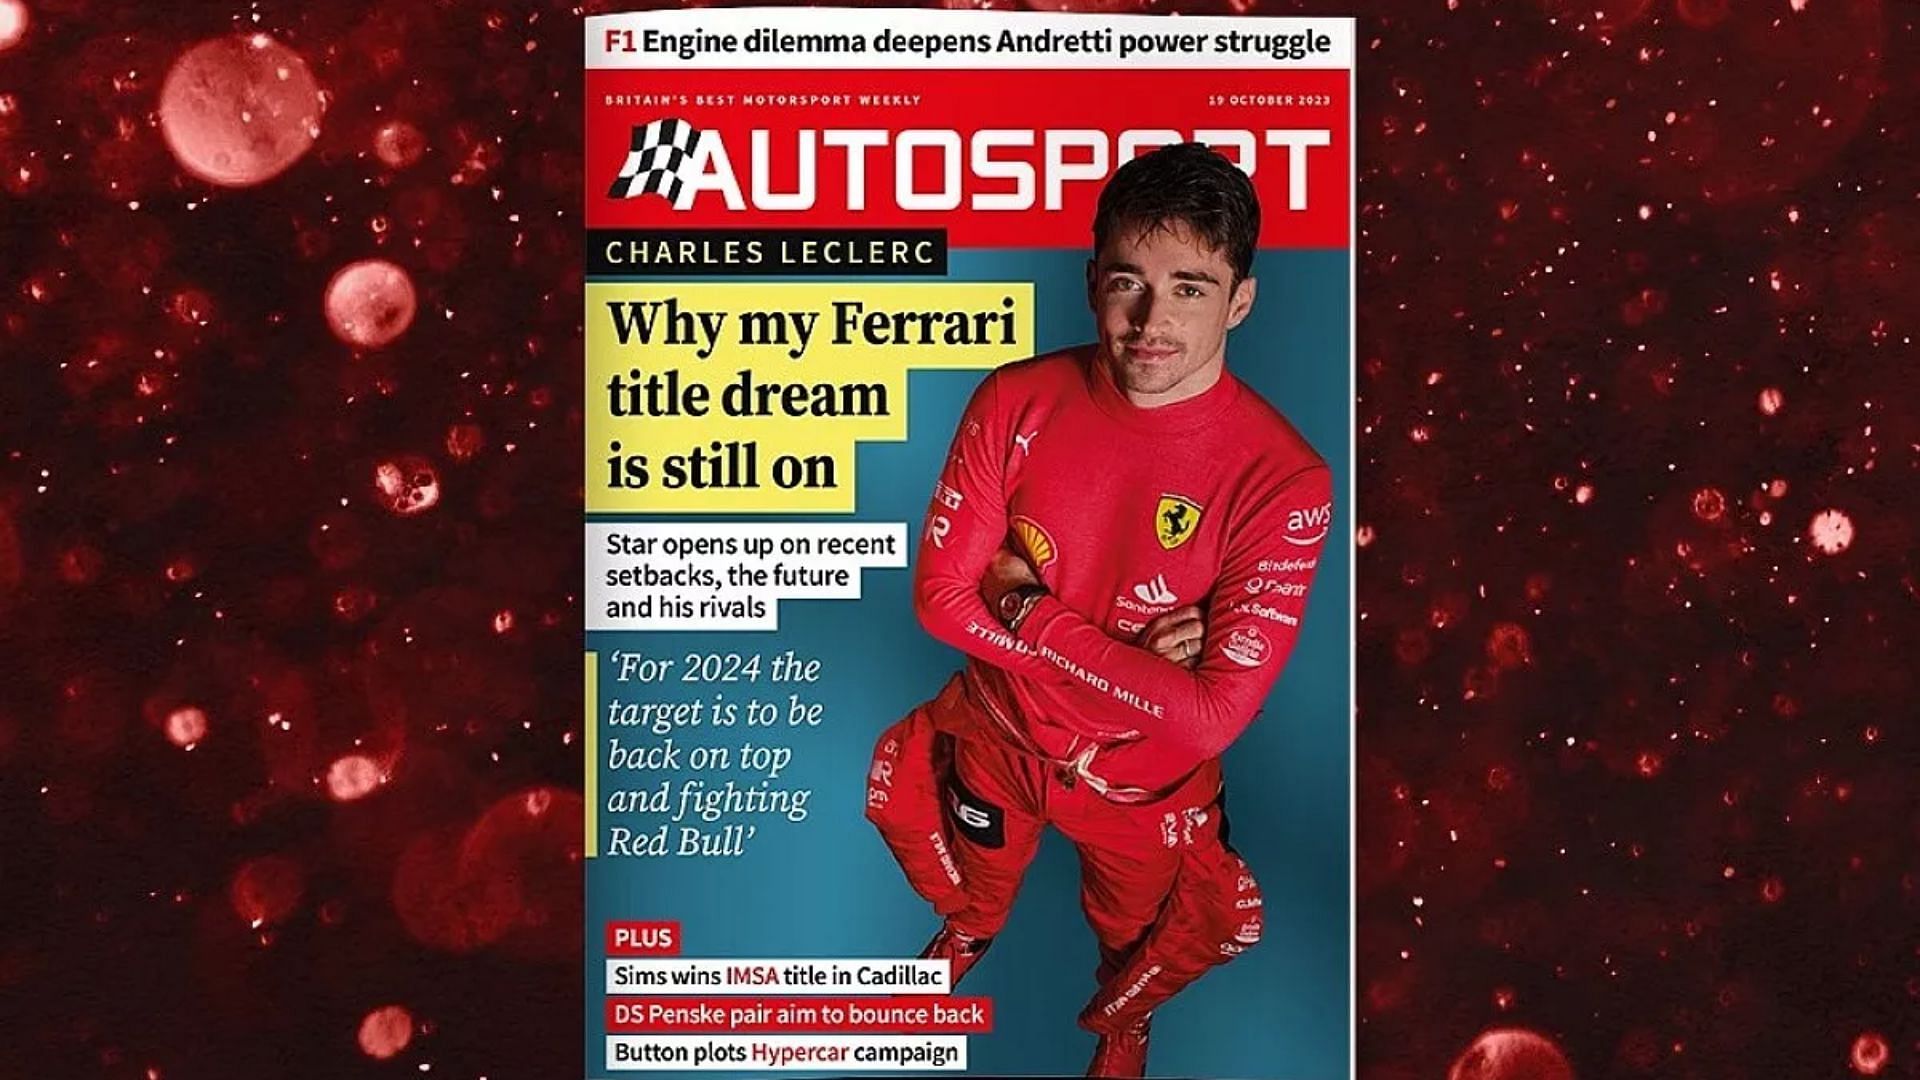 Charles Leclerc in Autosport cover (Image via Autosport)